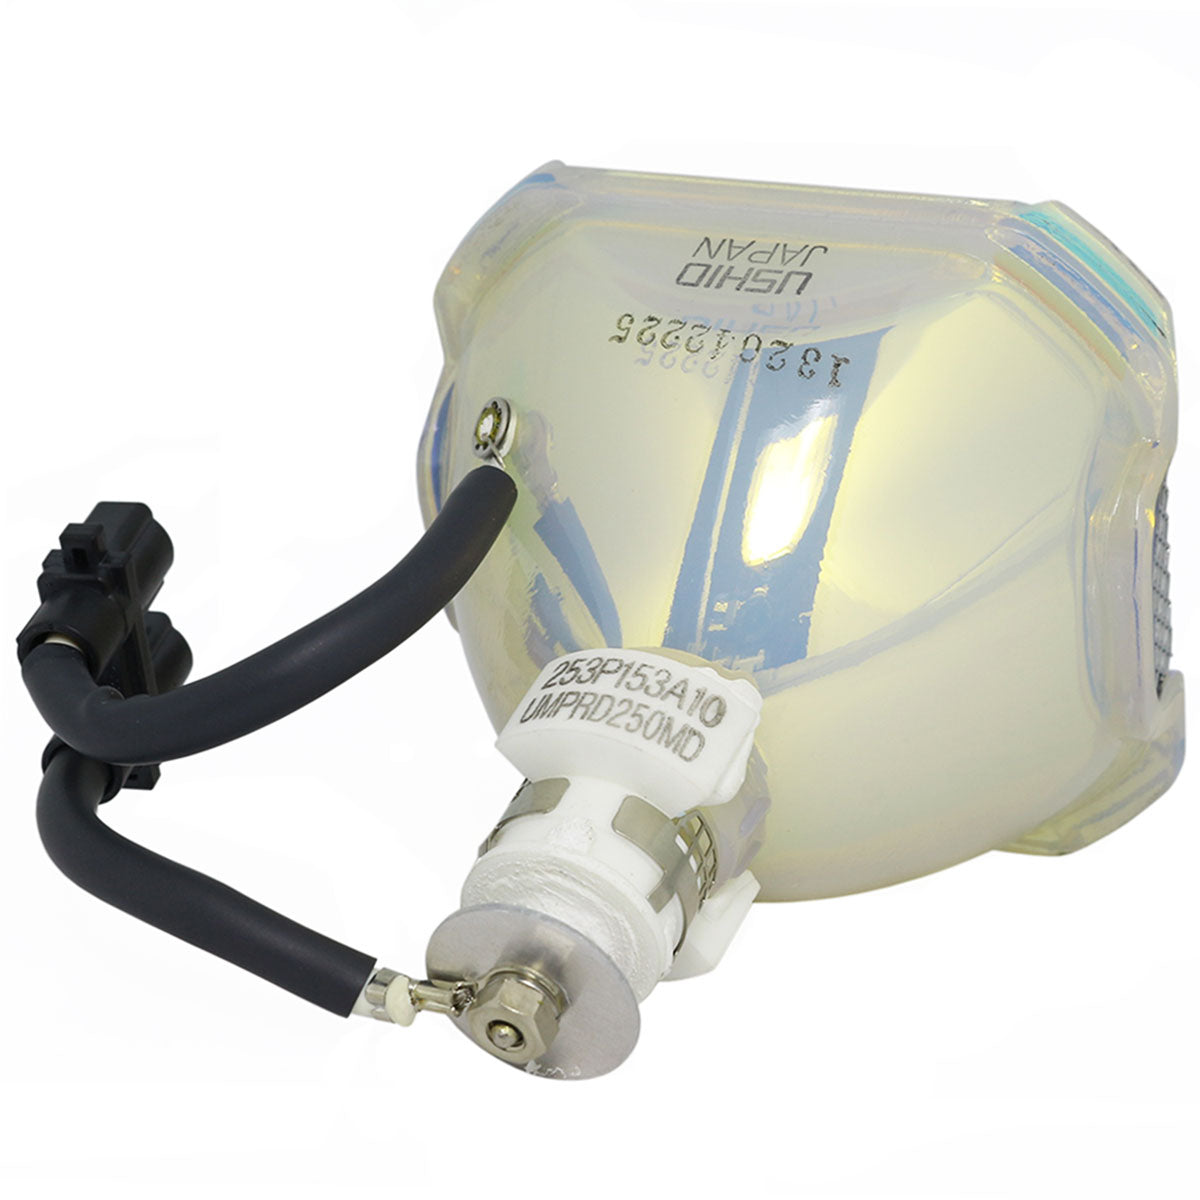 NEC DT02LP Ushio Projector Bare Lamp